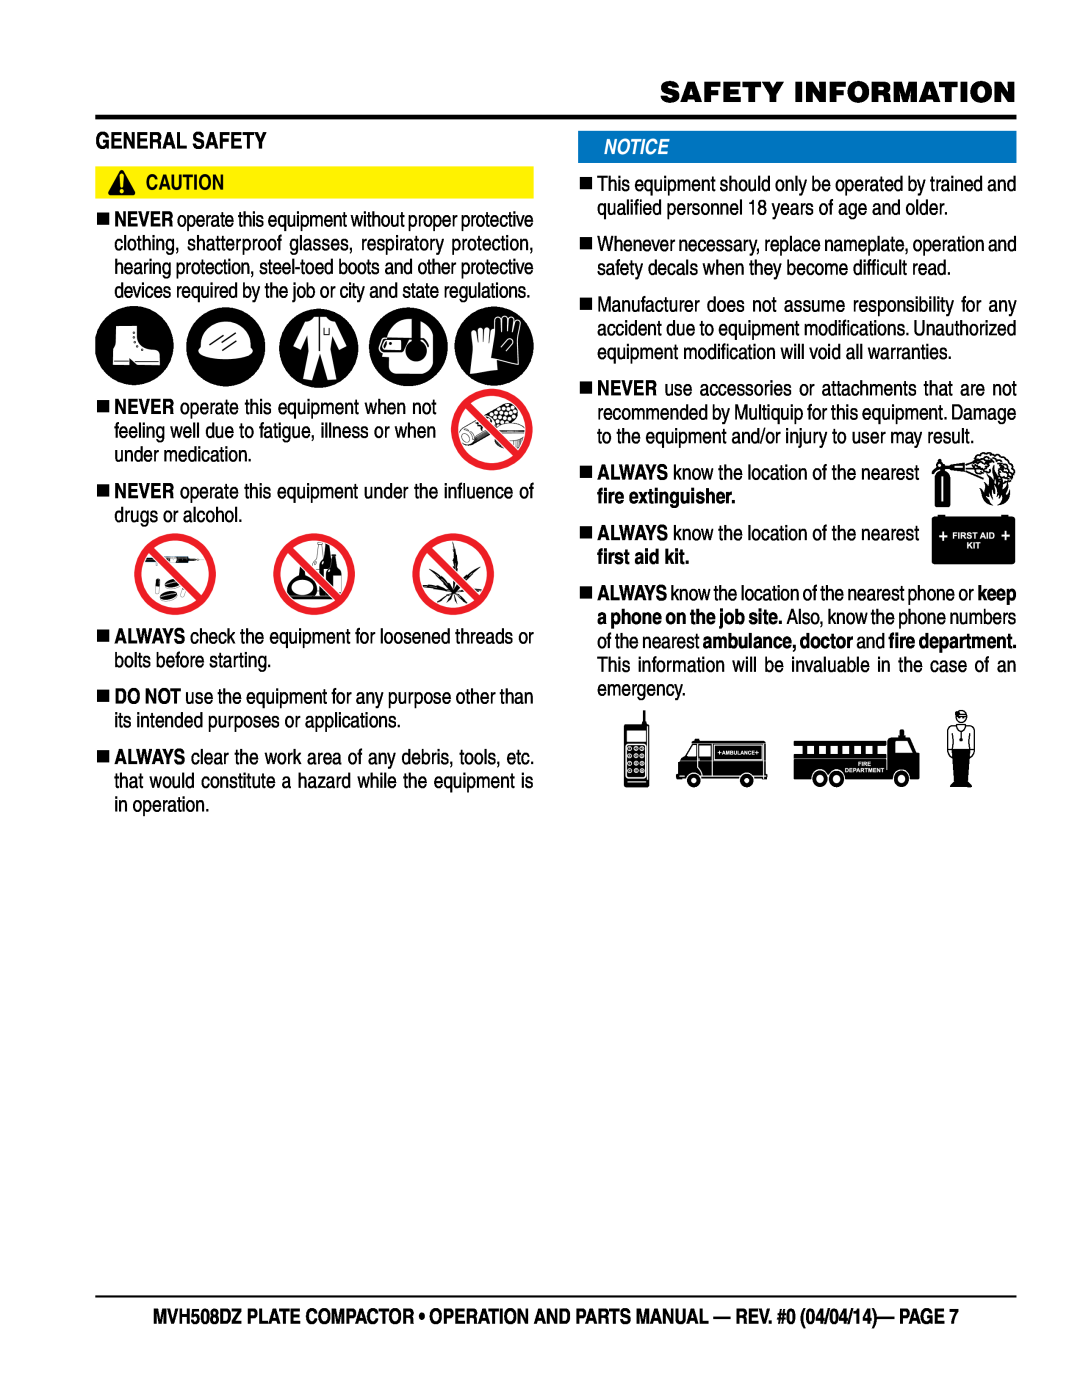 Multiquip HATZ1D81S-325 manual General Safety, Safety Information 